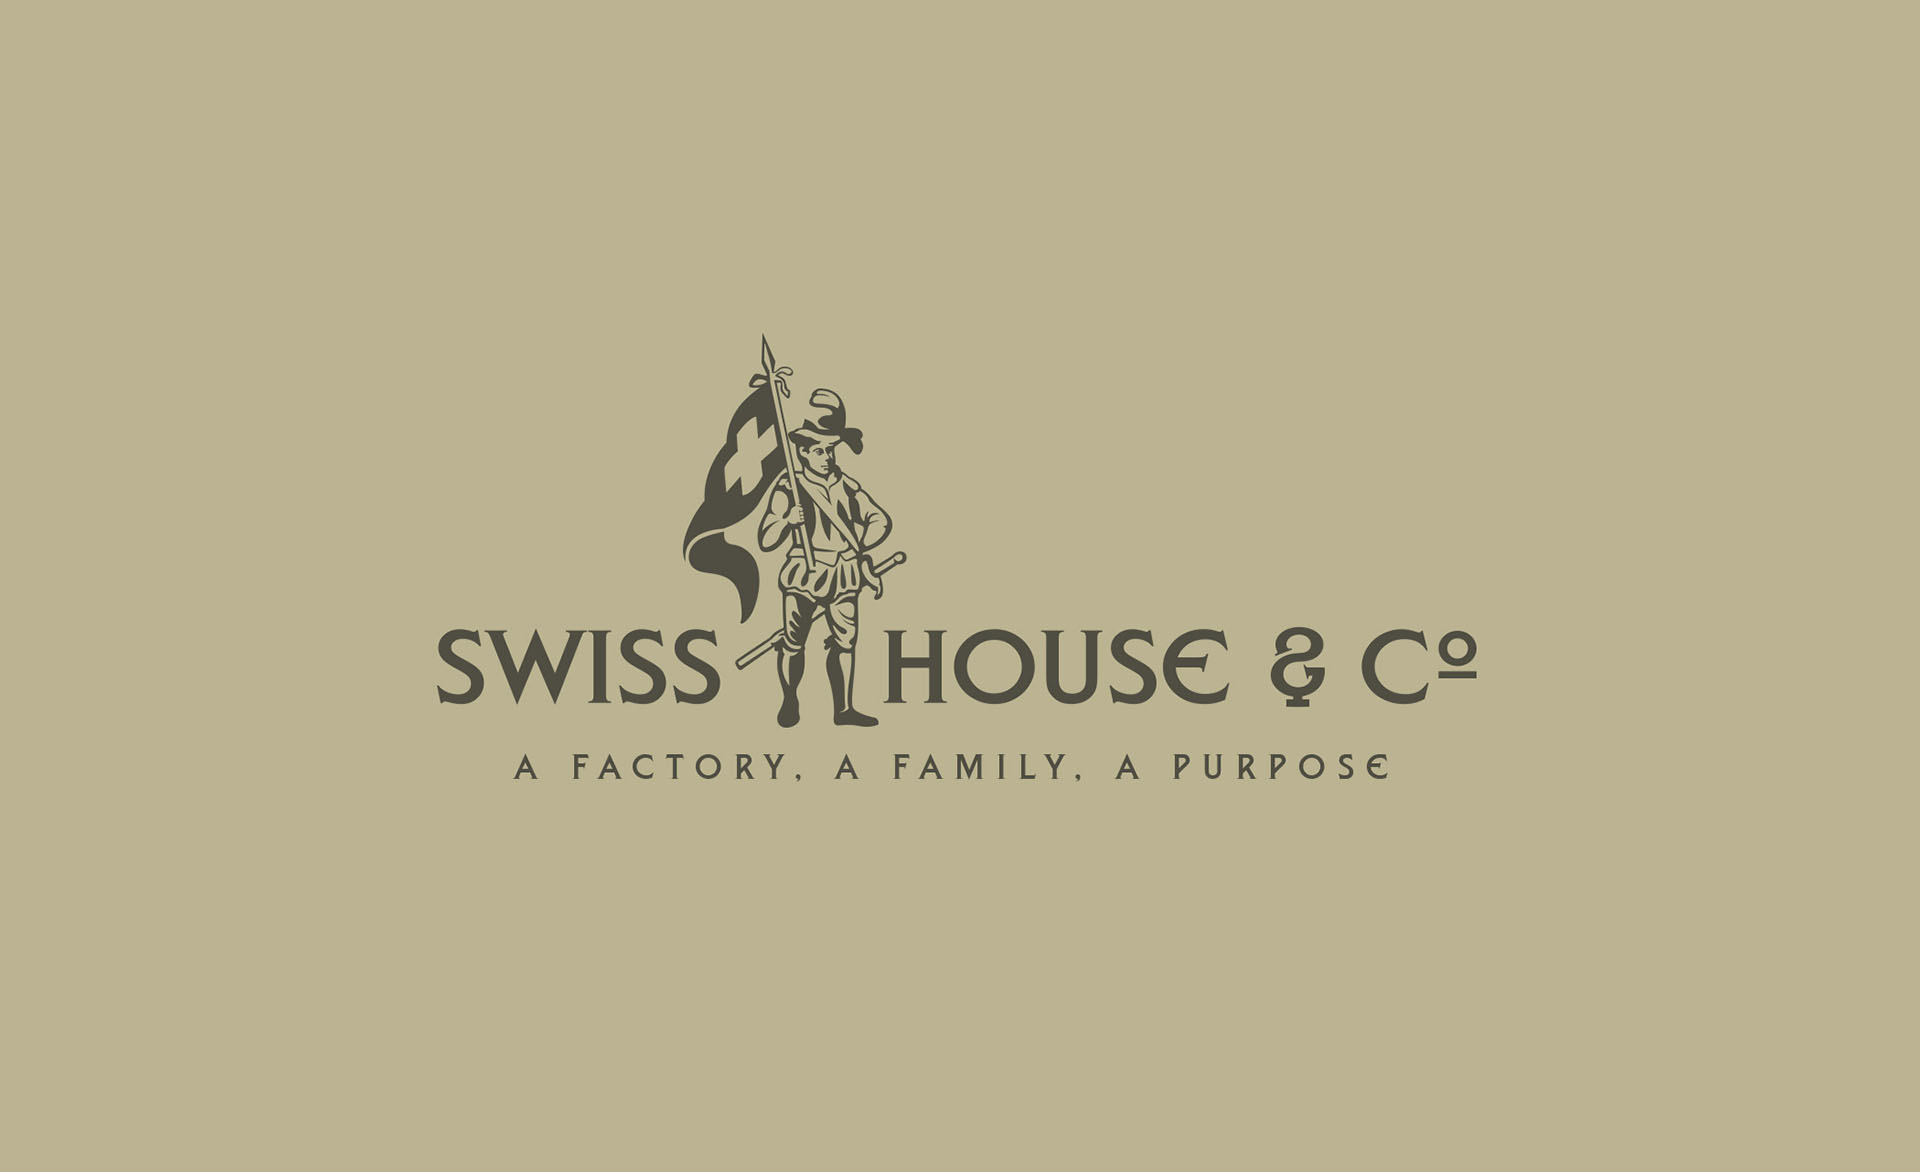 SWISS HOUSE Co